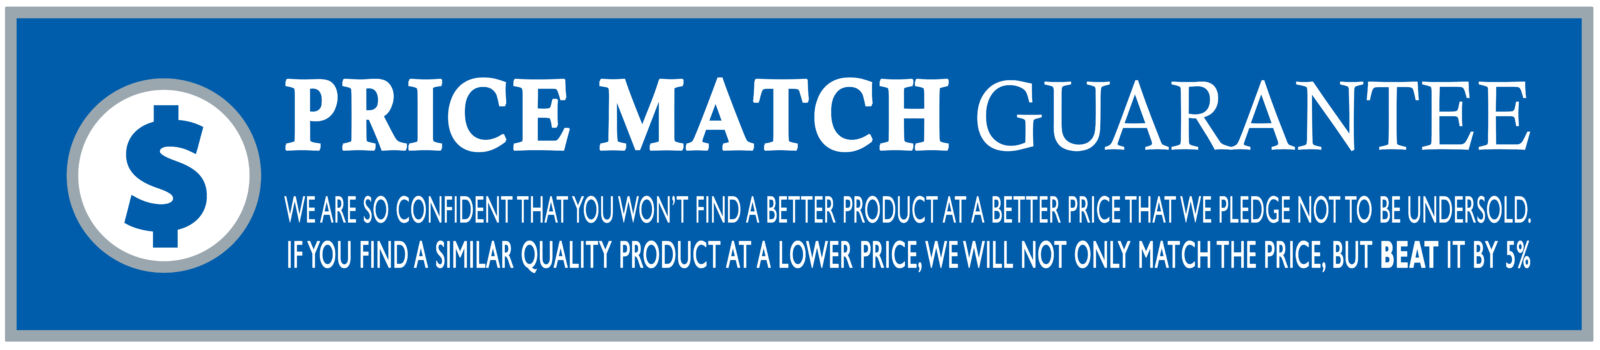 PS-Price-Match-Guarantee-badge-1600x350.jpg